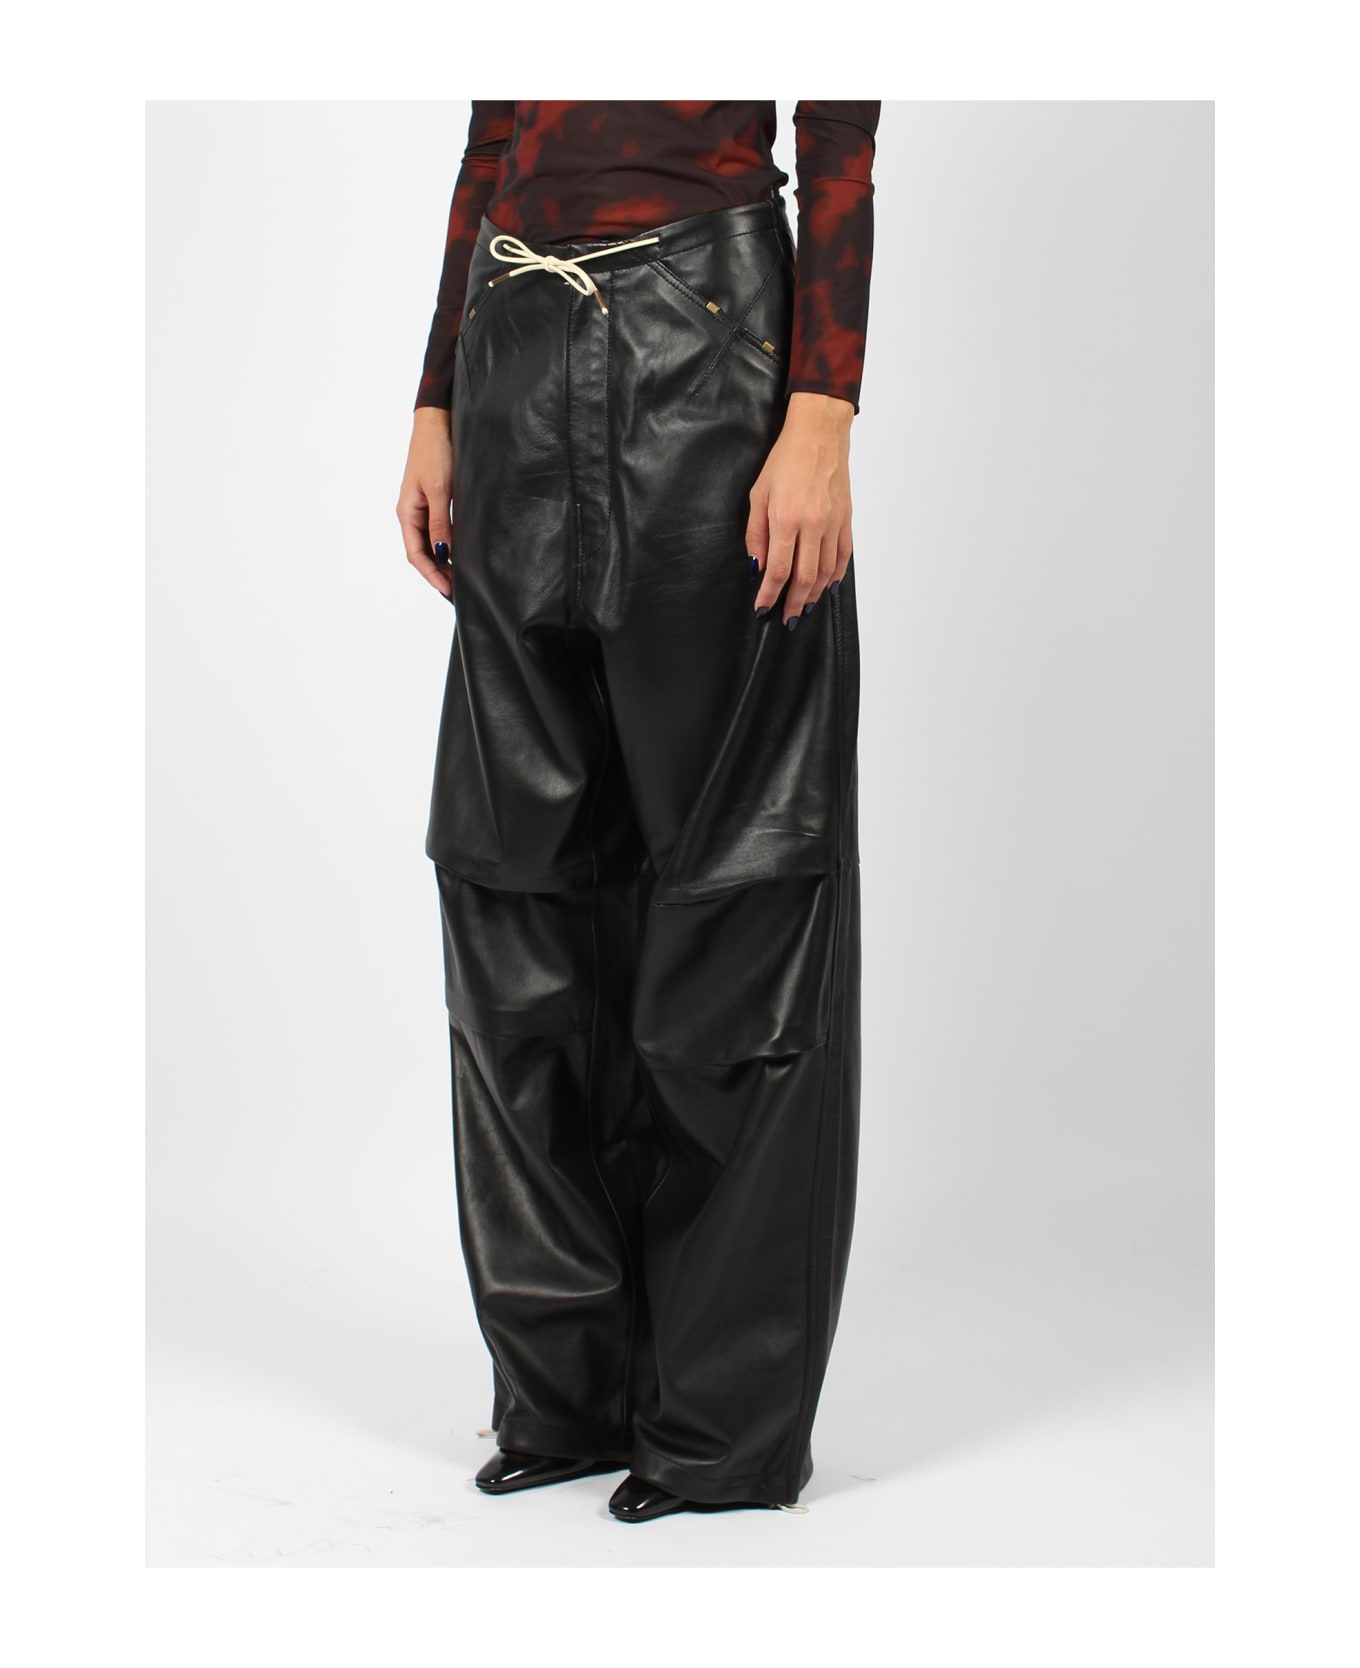 DARKPARK Daisy Plonge Nappa Leather Military Trousers - Black